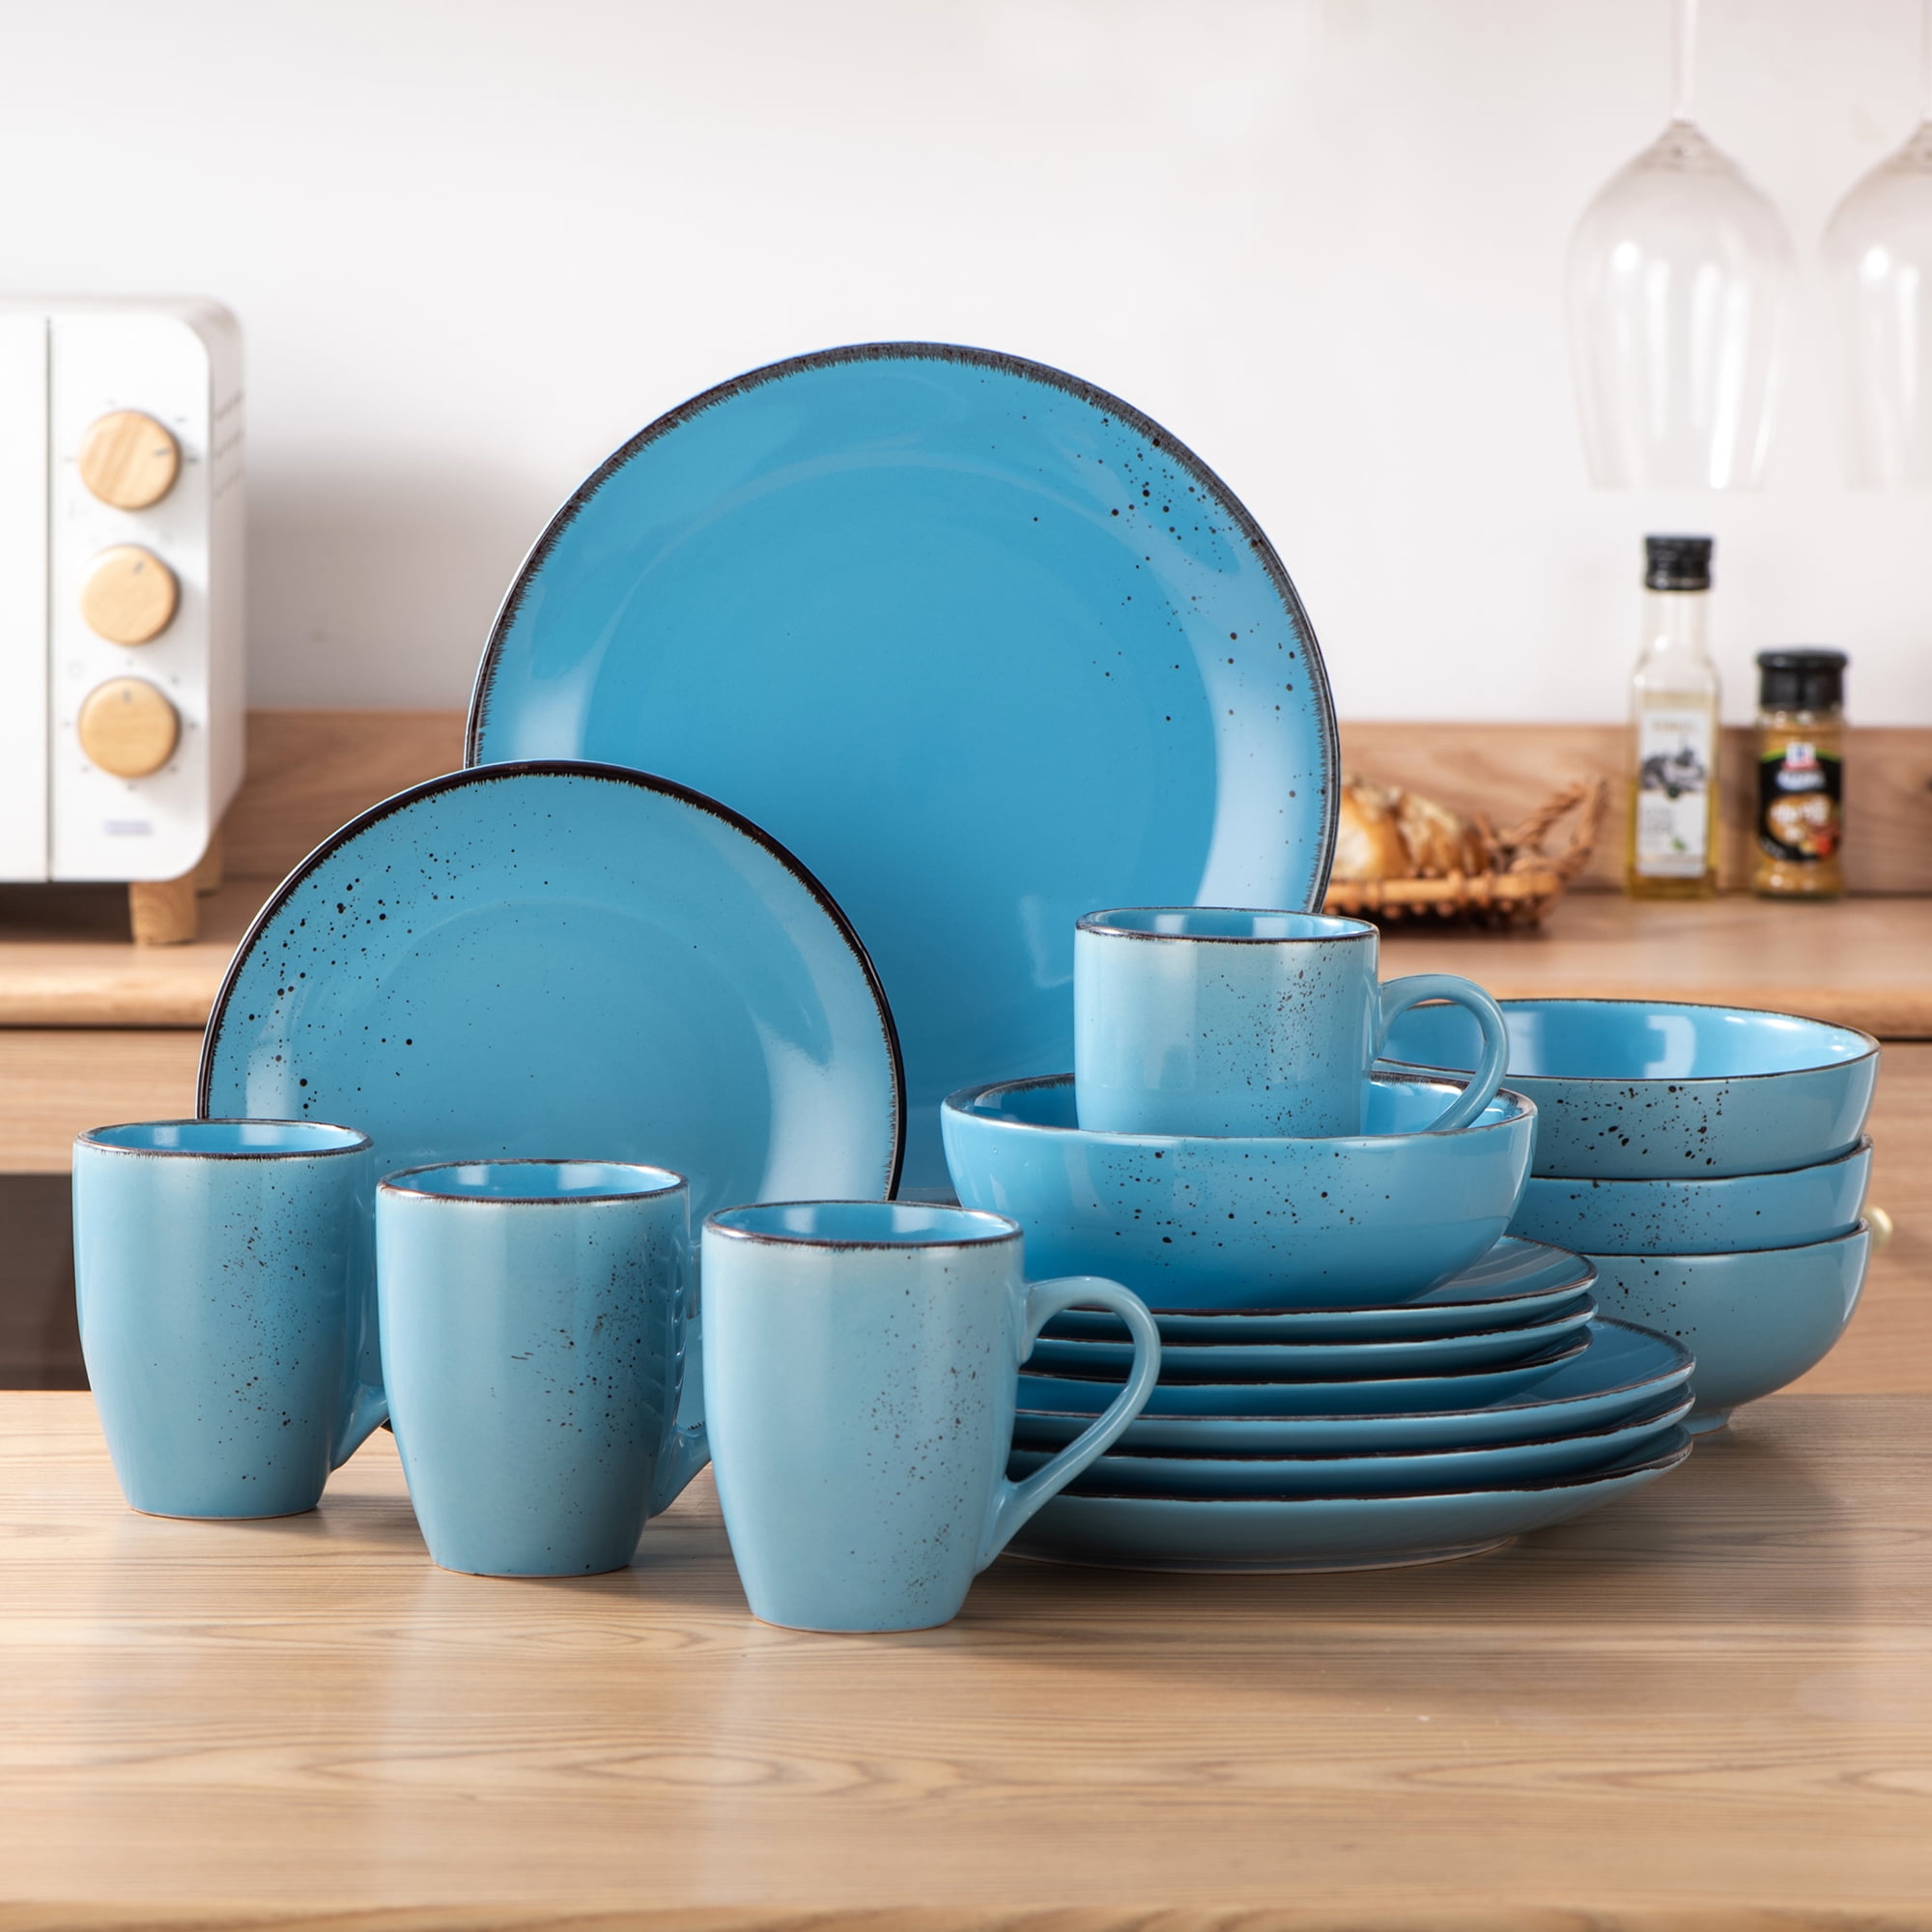 Set Dinnerware 16 Pcs Dishes Plate Mug Cup Modern Classic Vintage Aqua Blue New